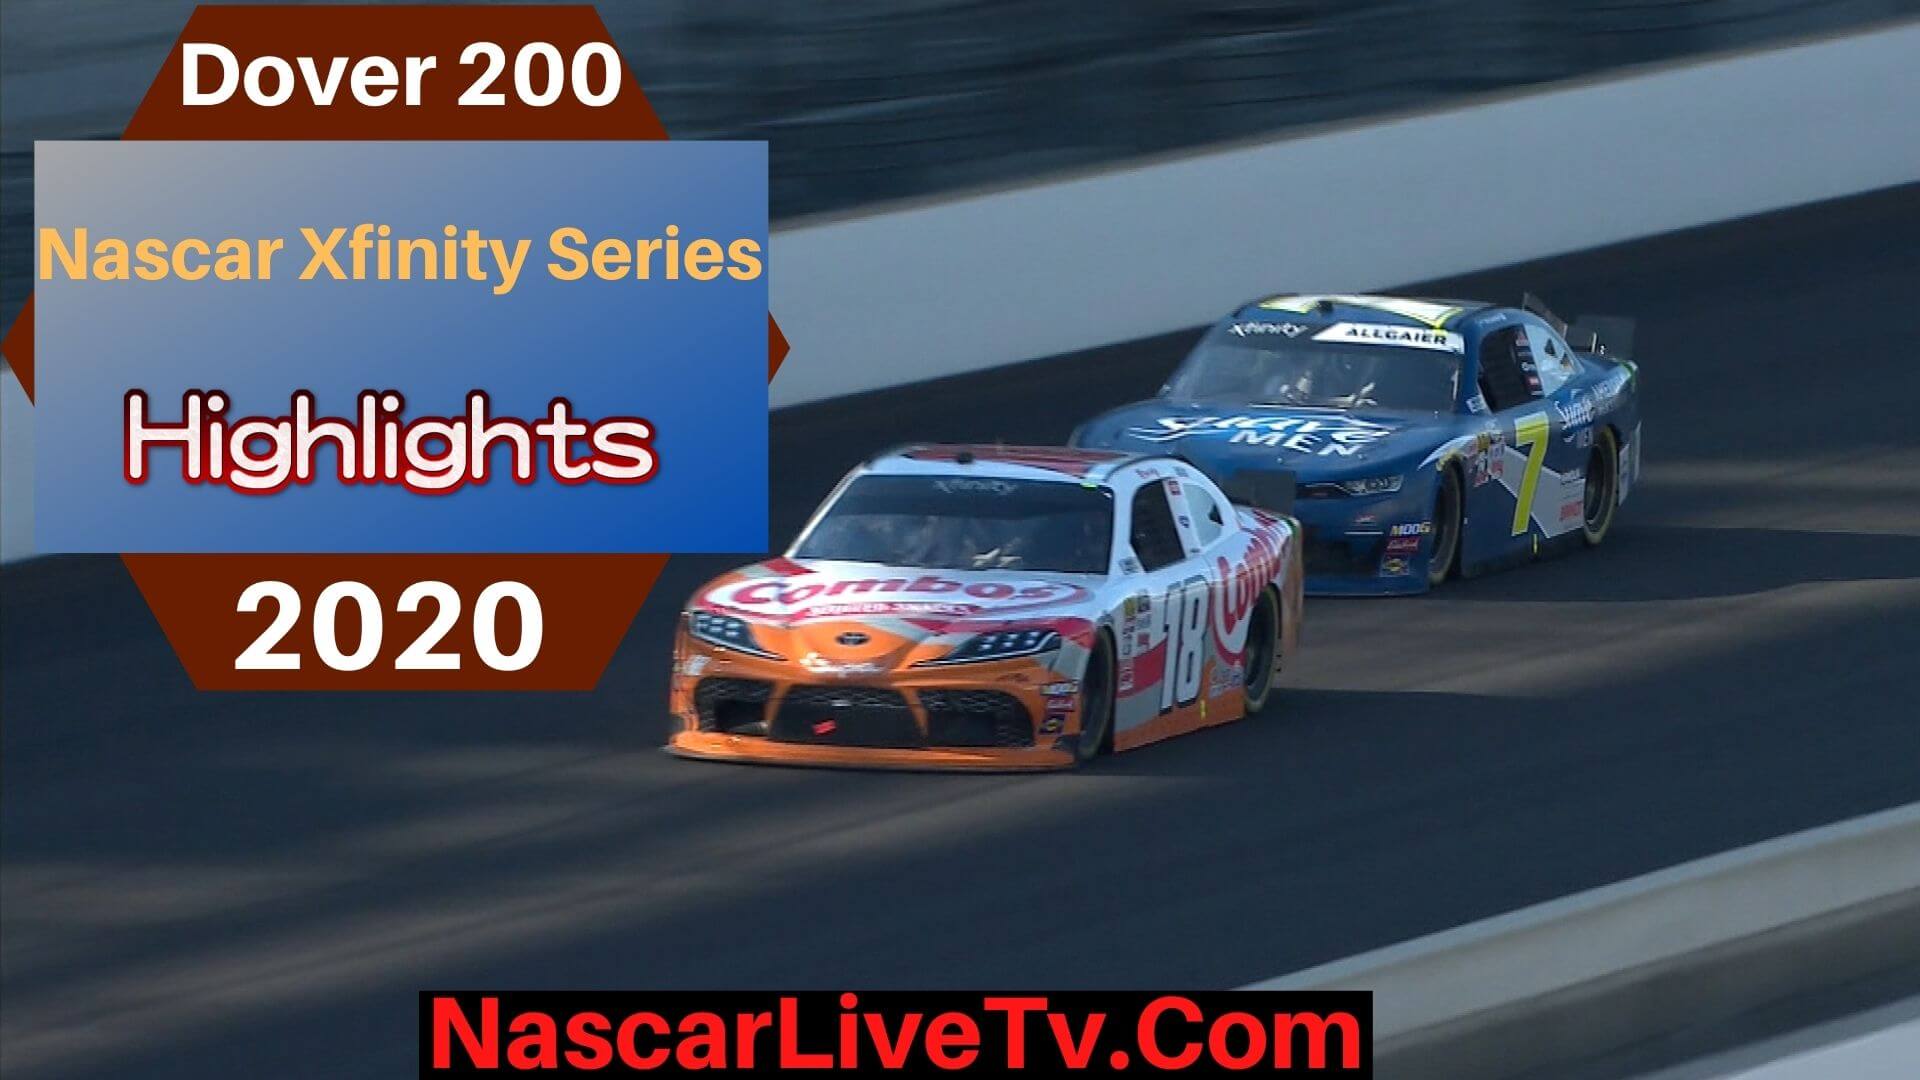 Dover 200 Nascar Xfinity Series 2020 Highlights